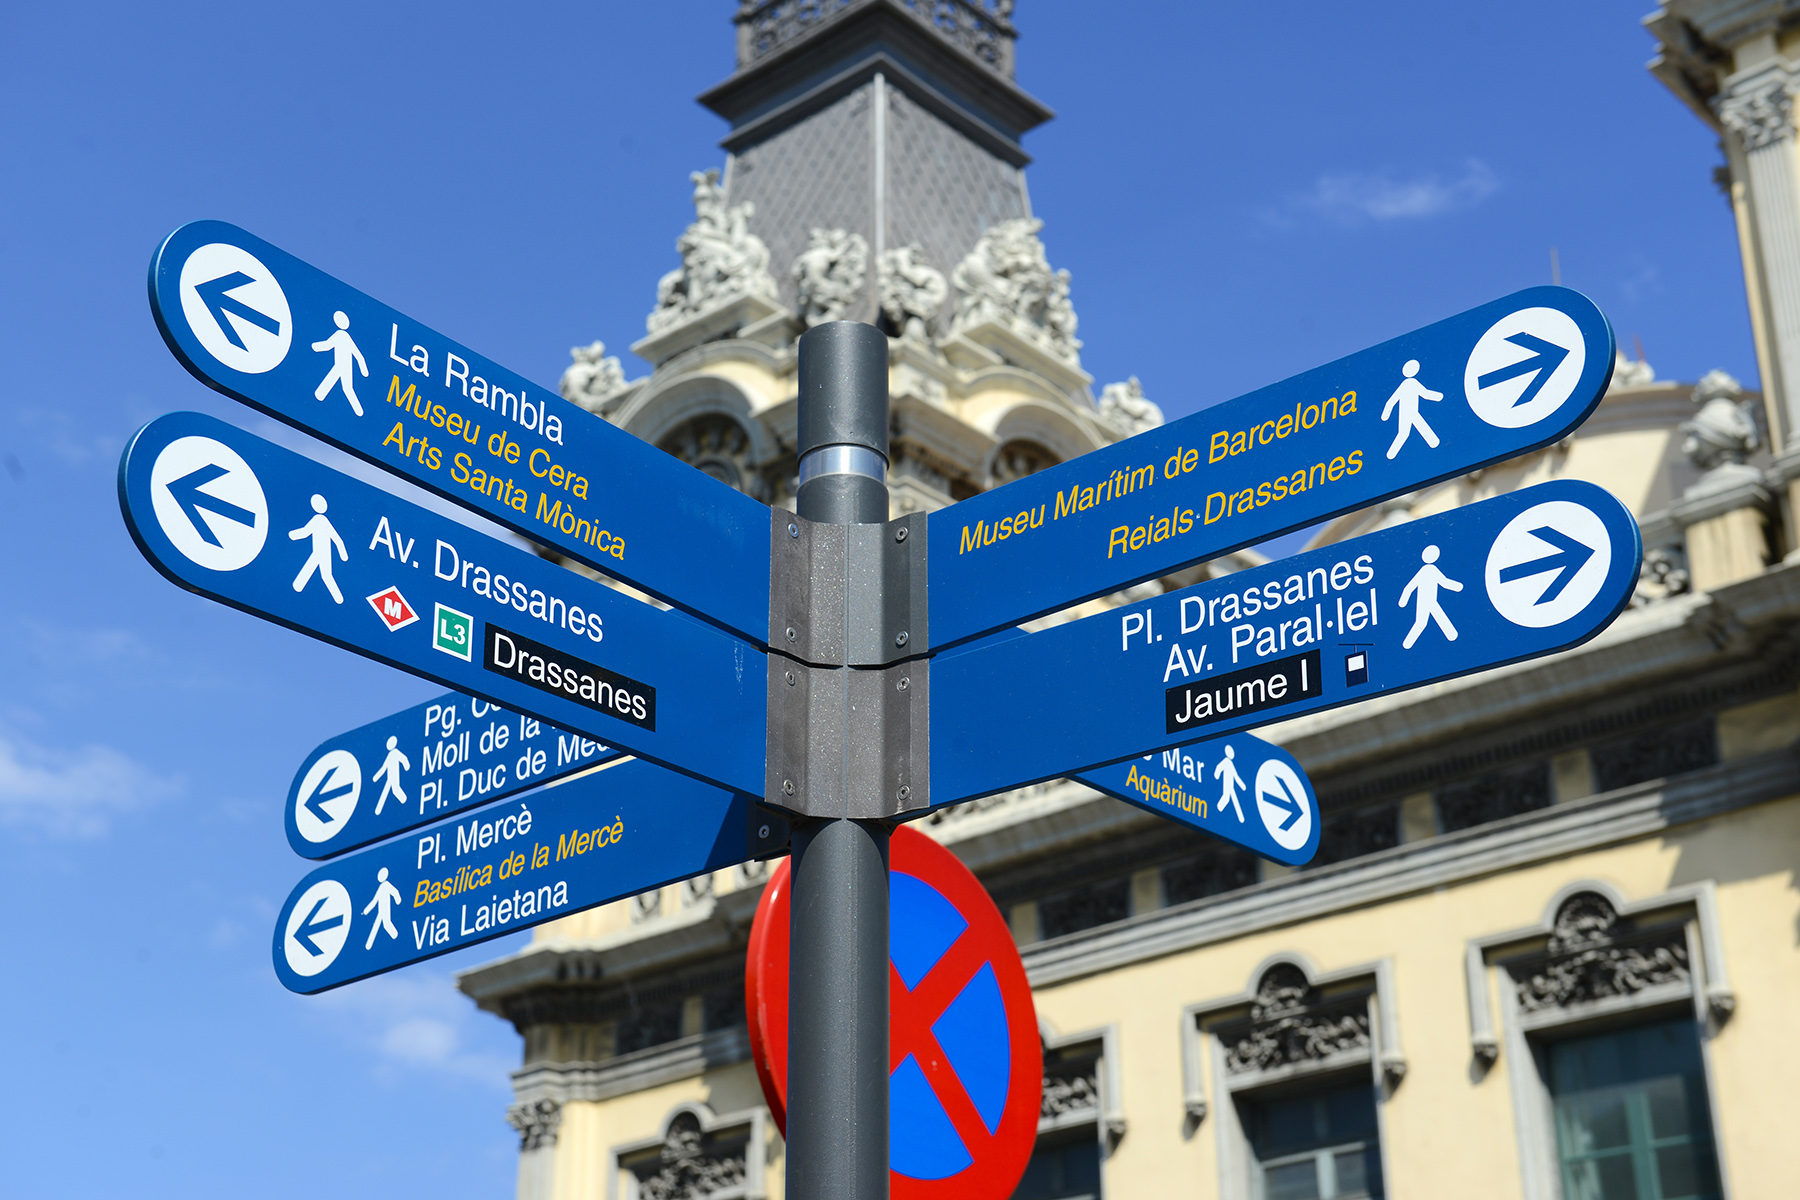 Multilingual street signs in Barcelona